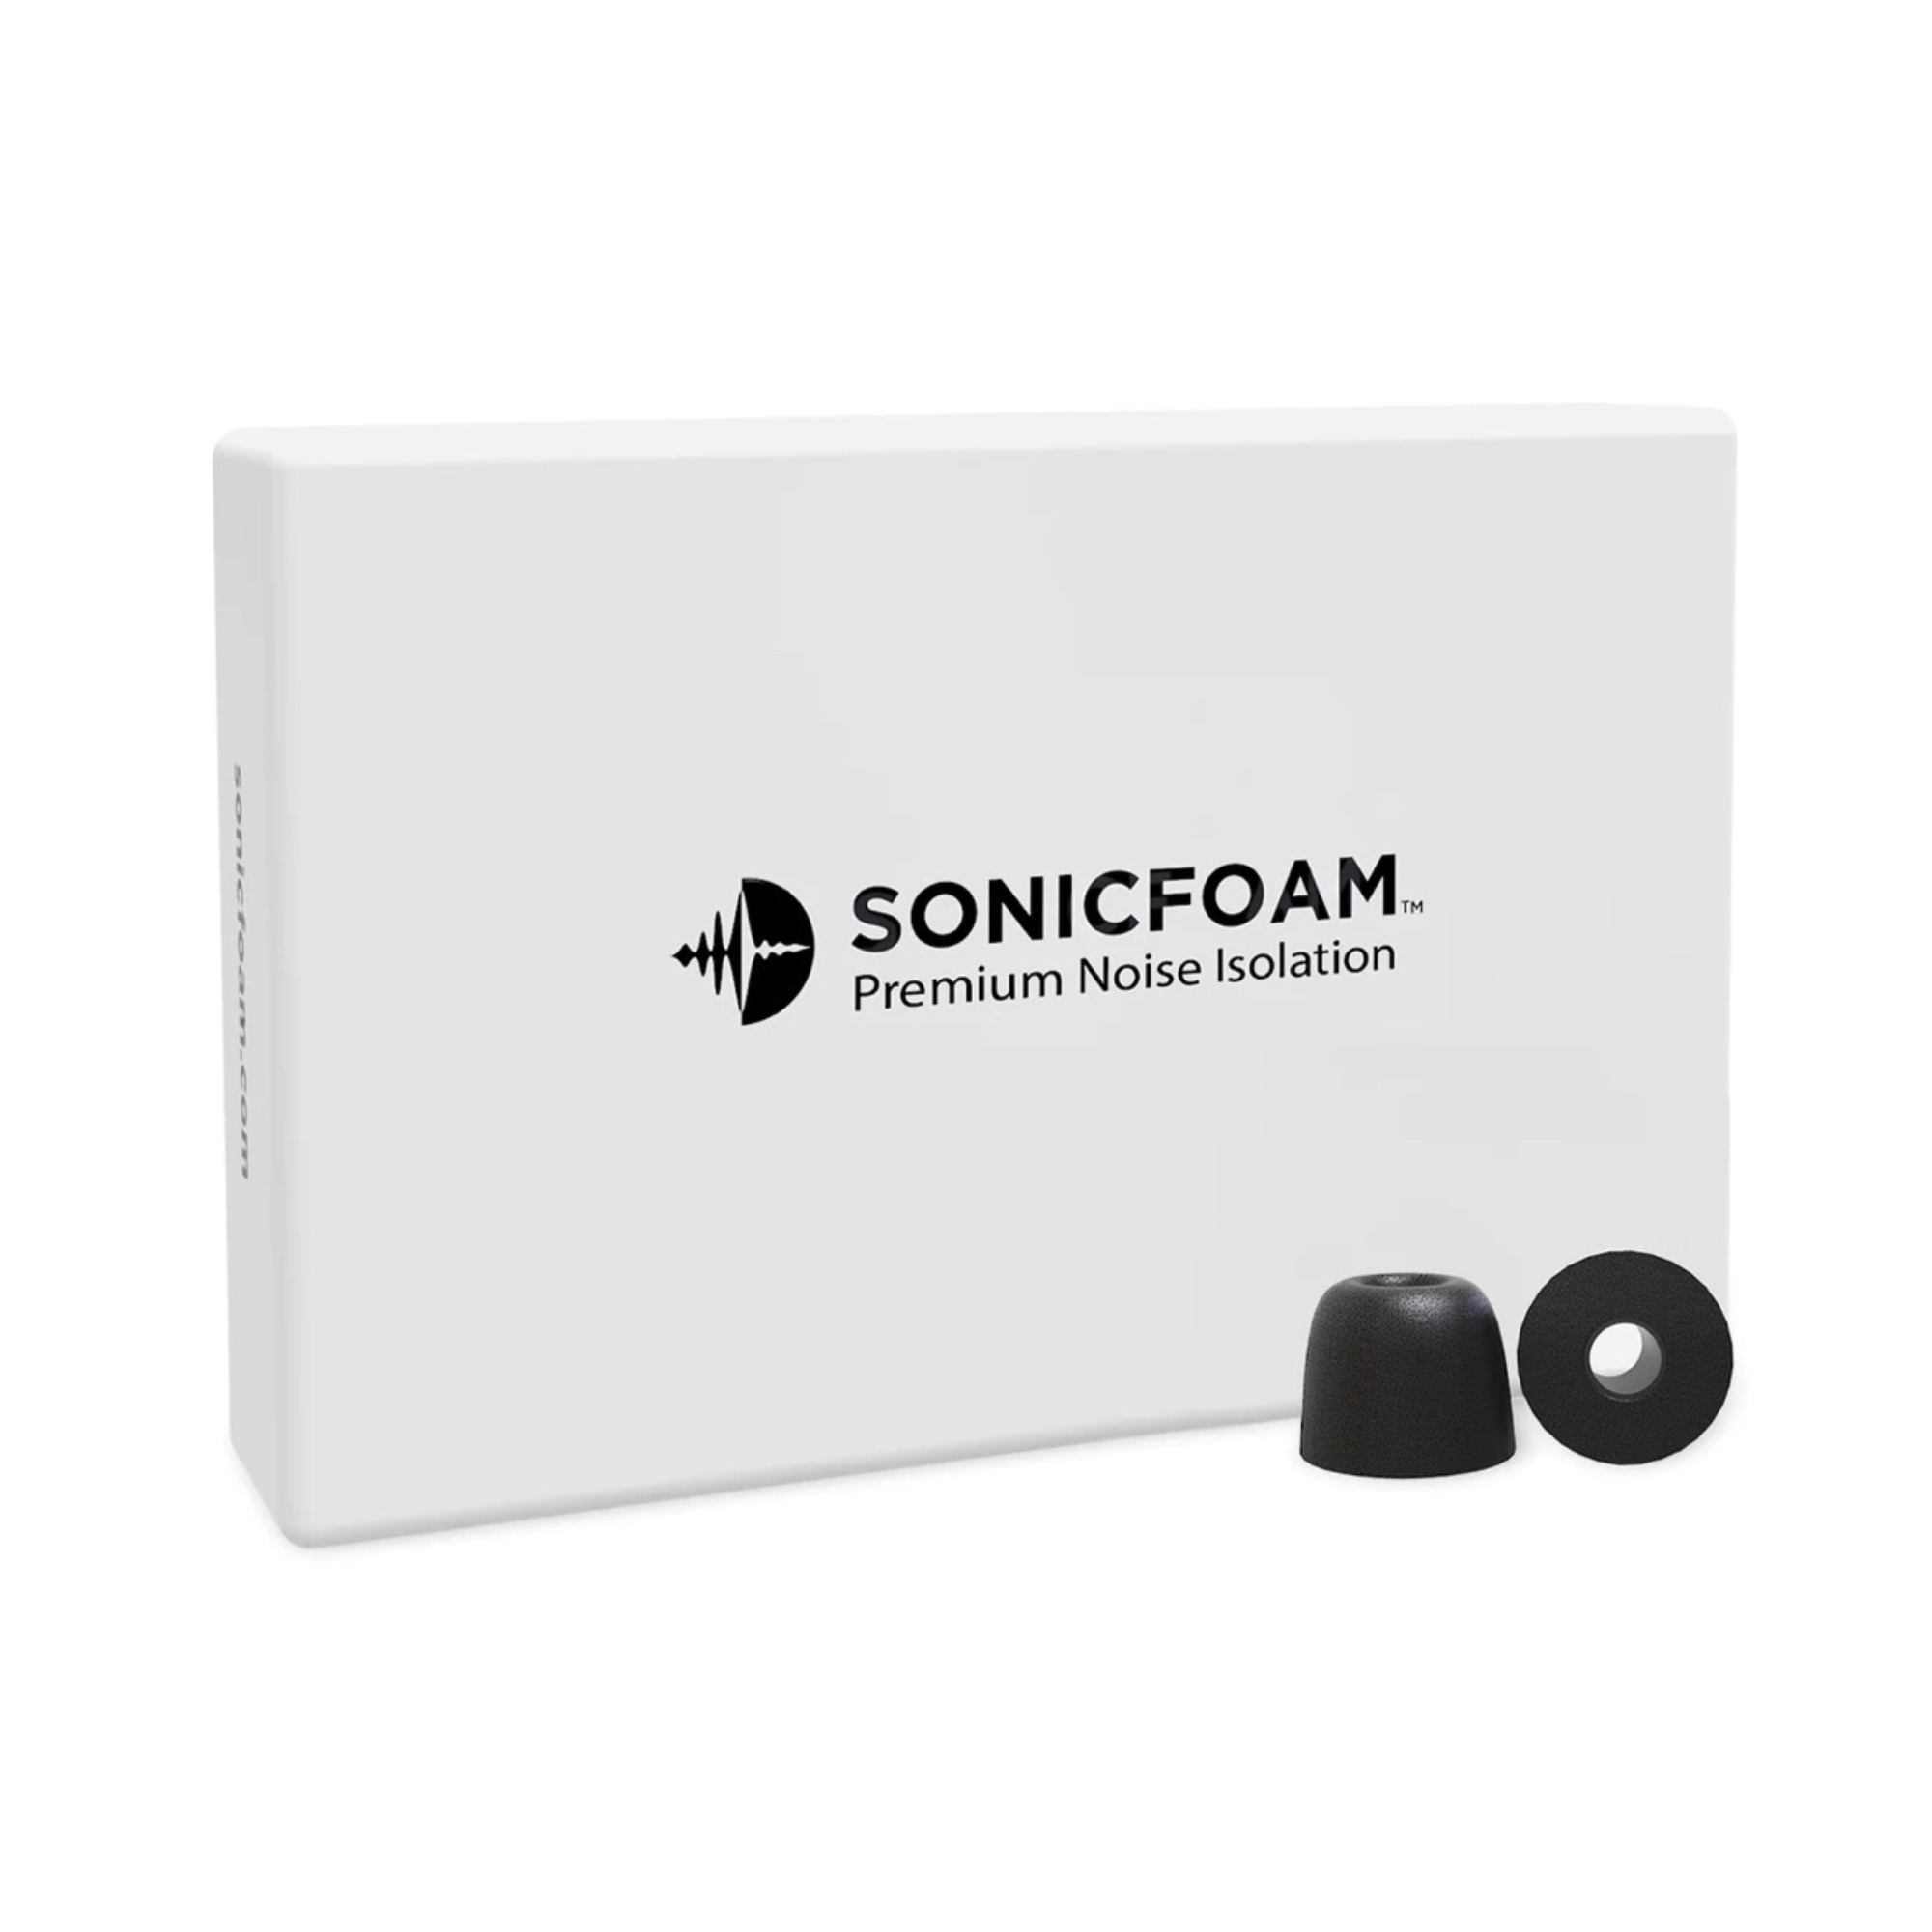 Black foam IEM tips in front of white box with Sonicfoam logo.